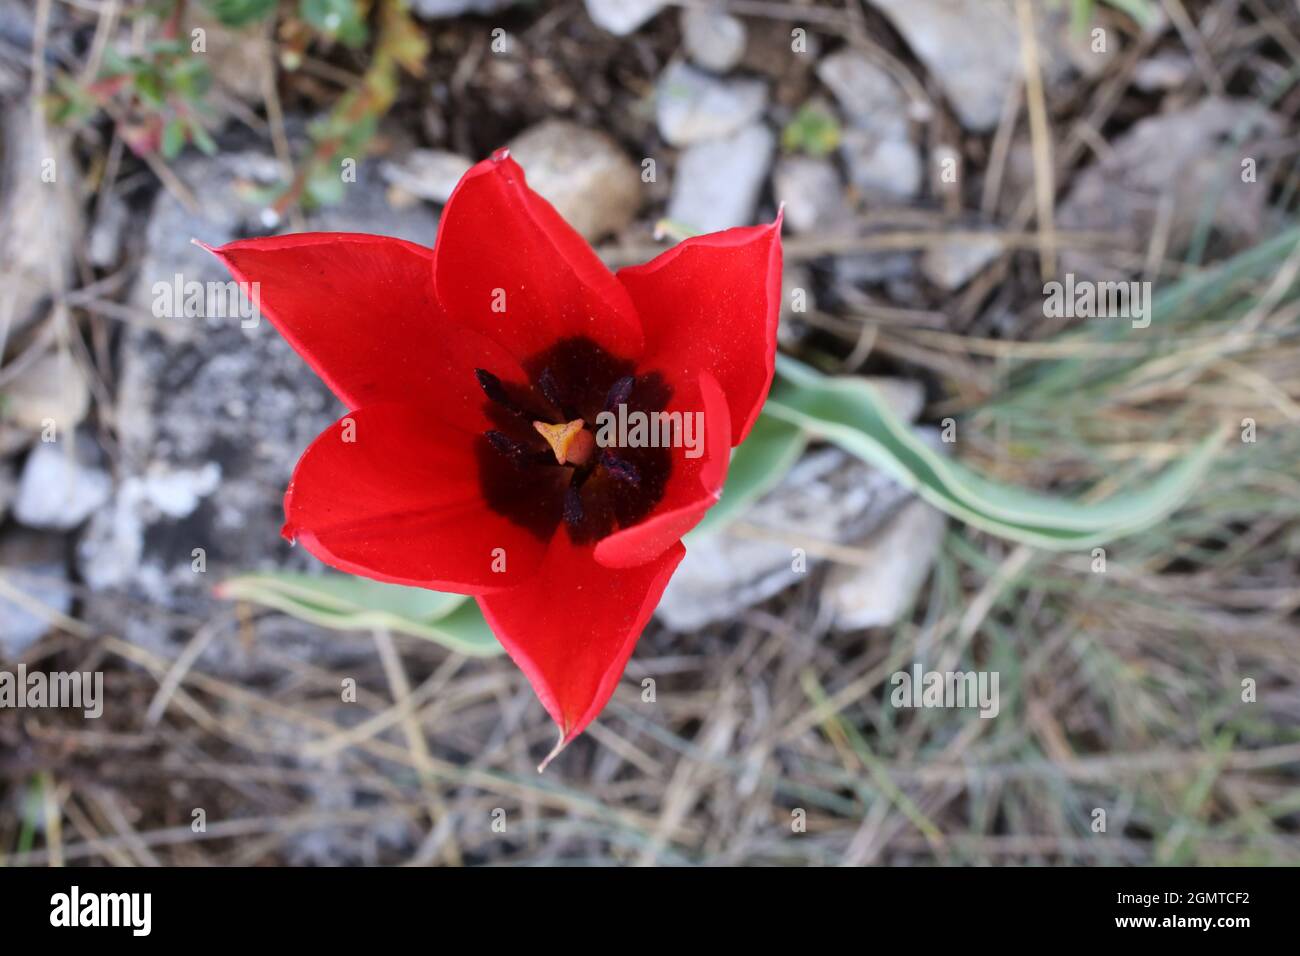 Tulipa pirinica, Liliaceae. Wild plant shot in spring. Stock Photo